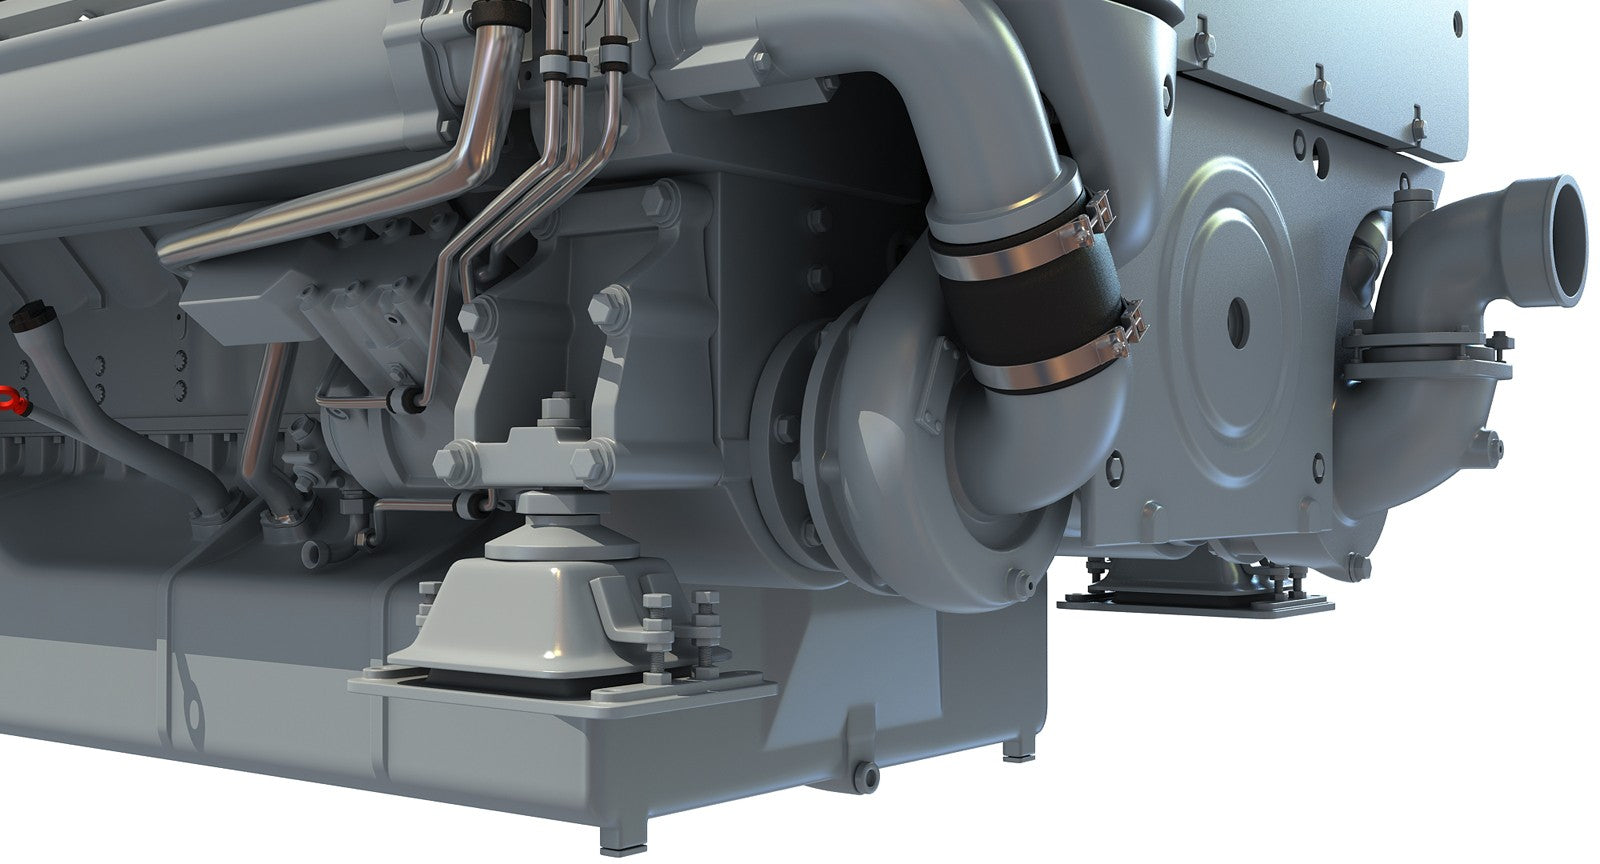 Diesel Engine for Yachts 3D Model